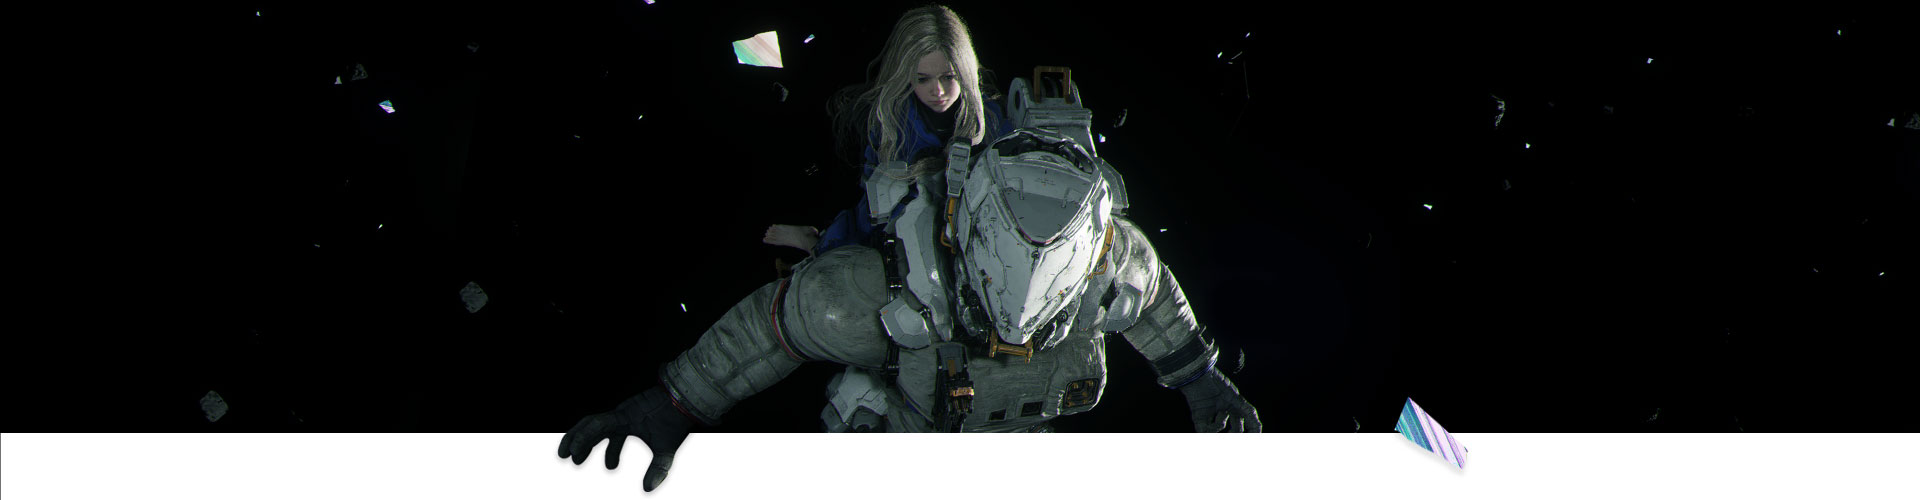 En pige rider på en astronaut gennem rummet